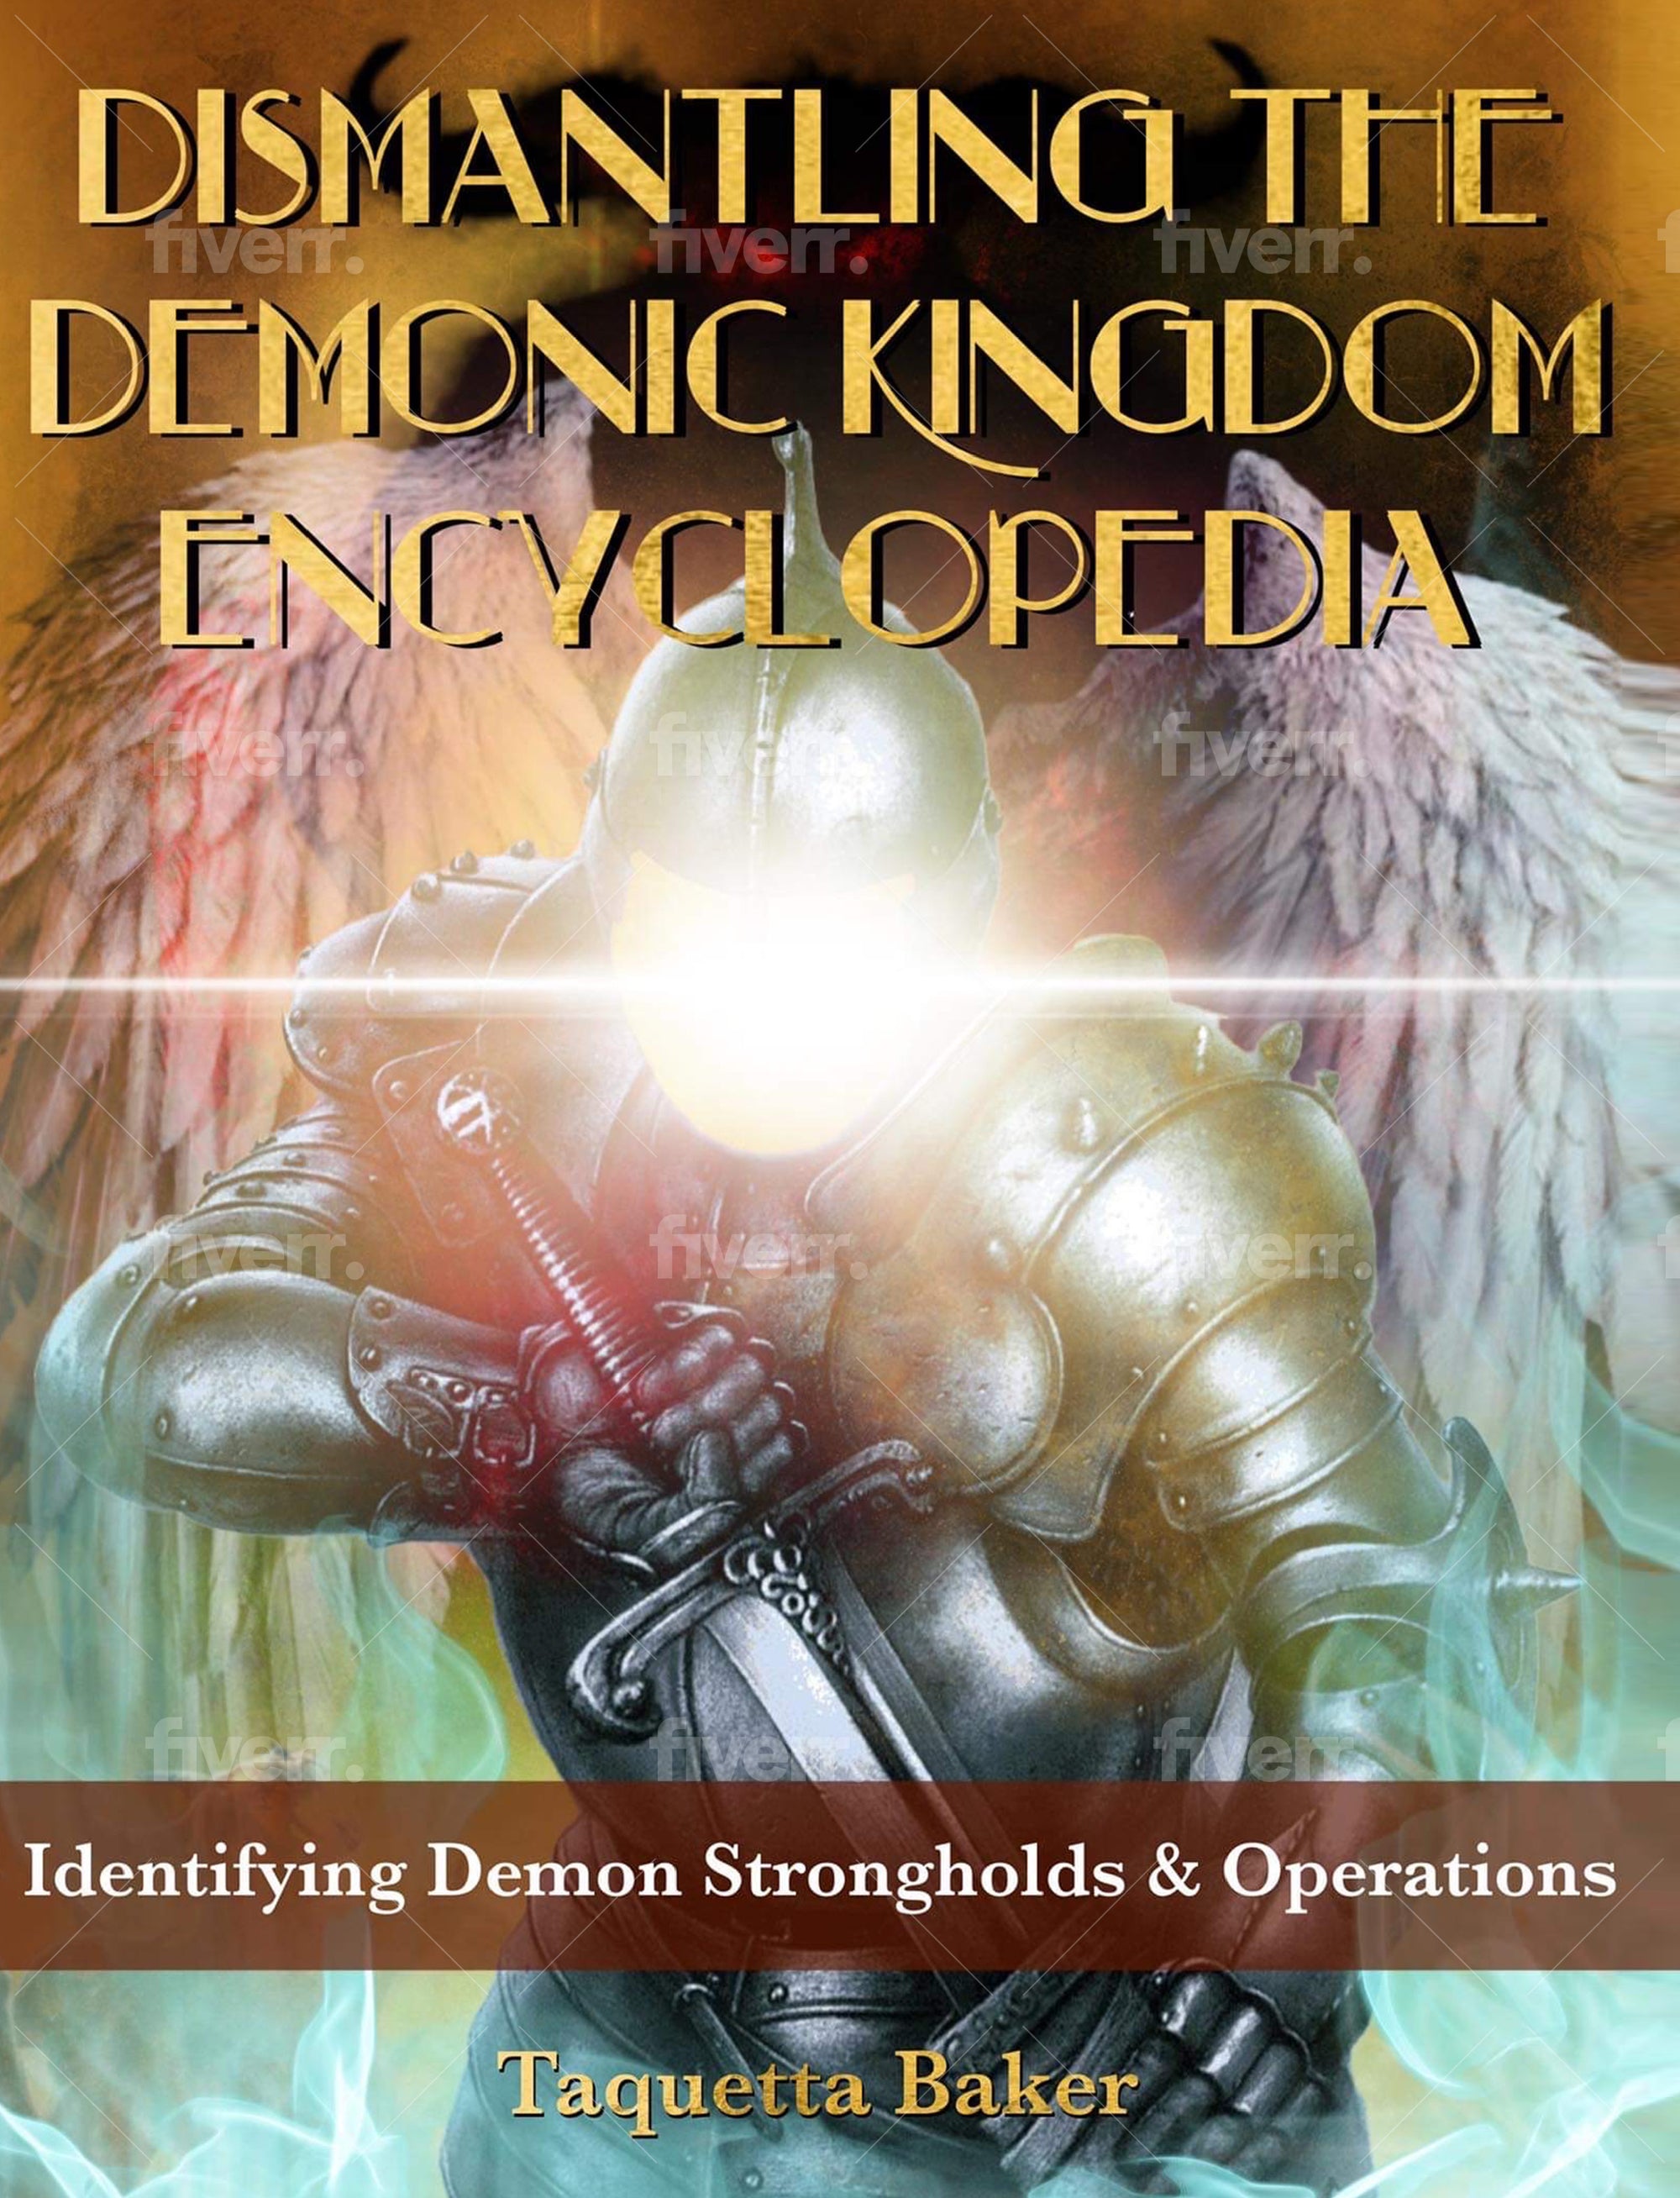 Dismantling The Demonic Kingdom Encyclopedia